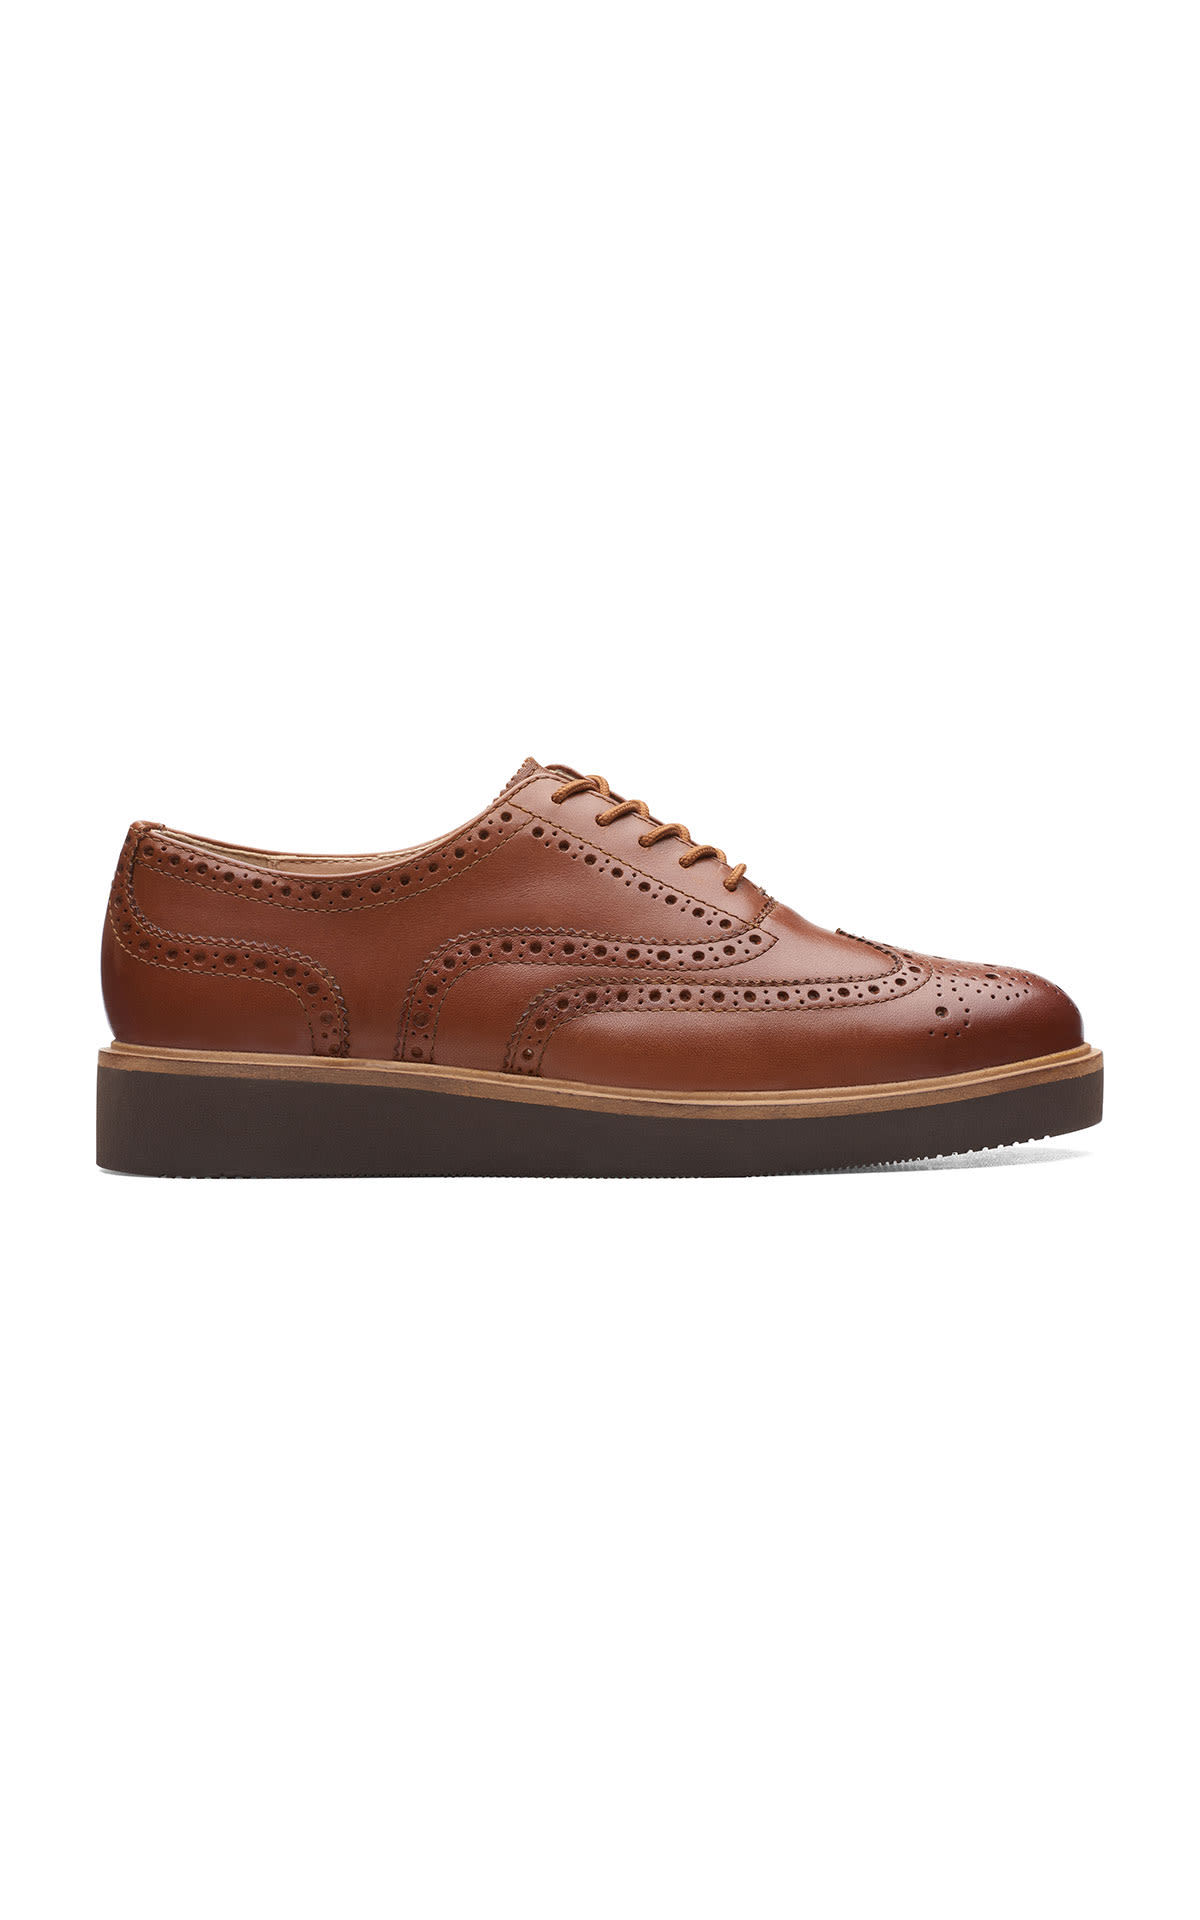 Brown Glickly Brogue shoe clarks